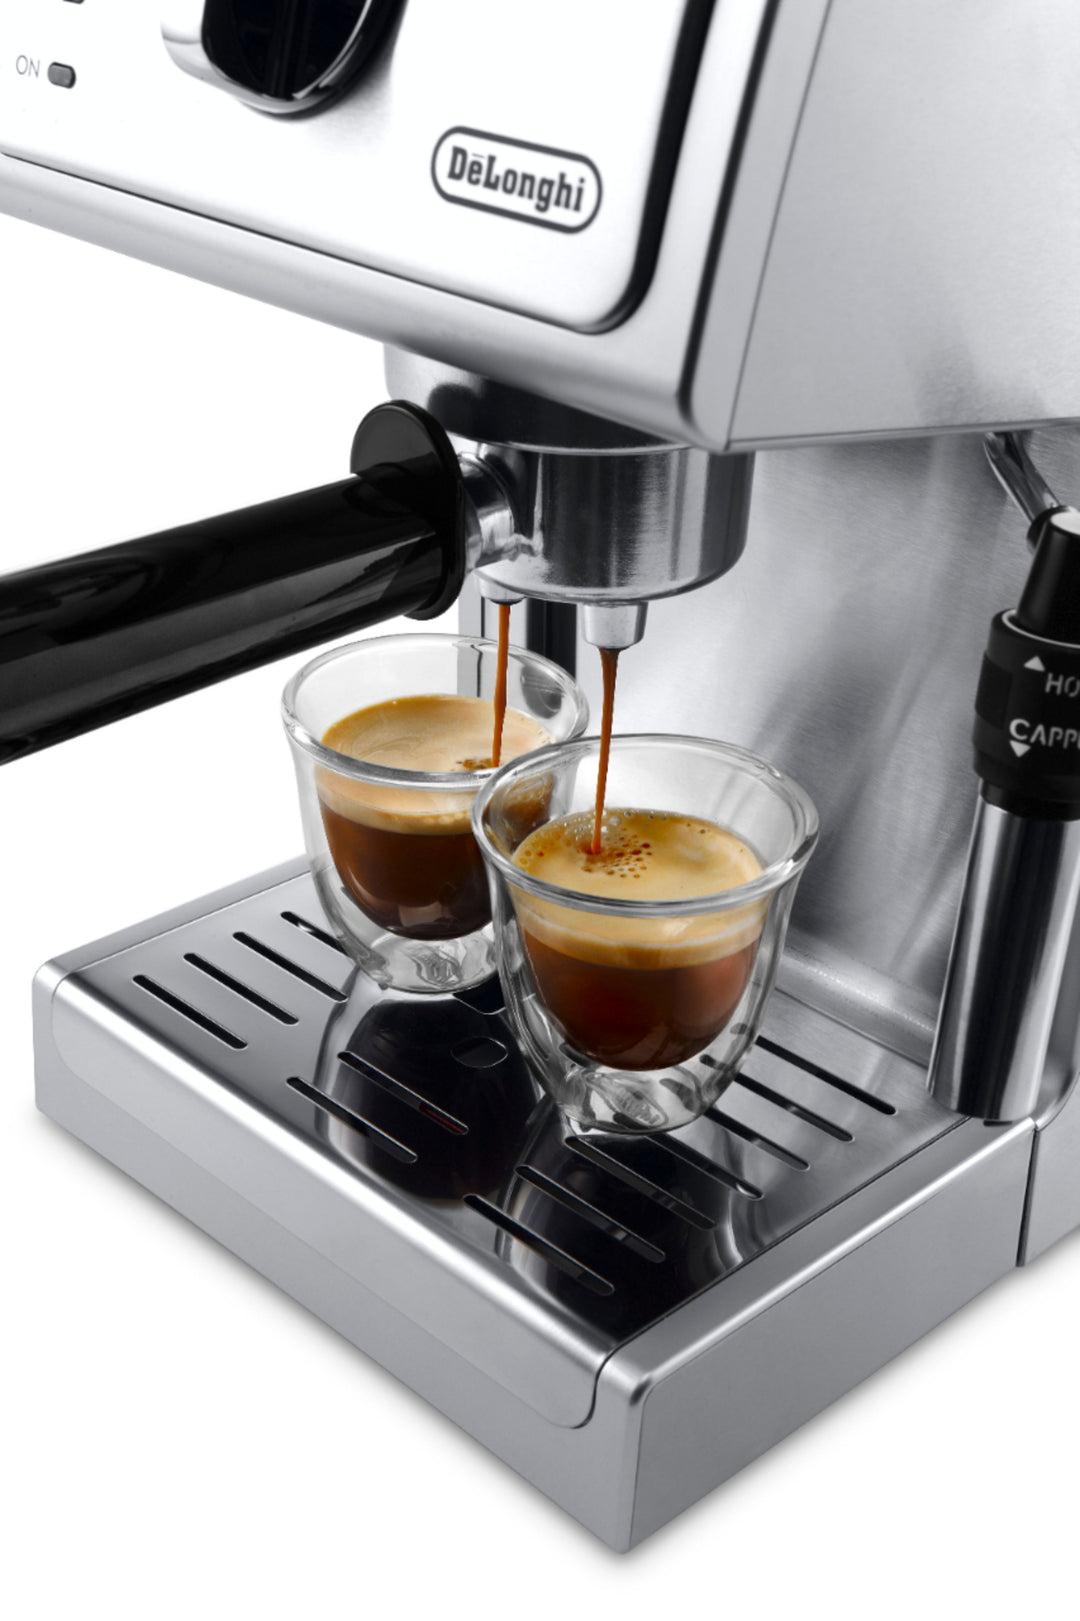 De'Longhi - Manual Espresso Machine - Stainless Steel_1